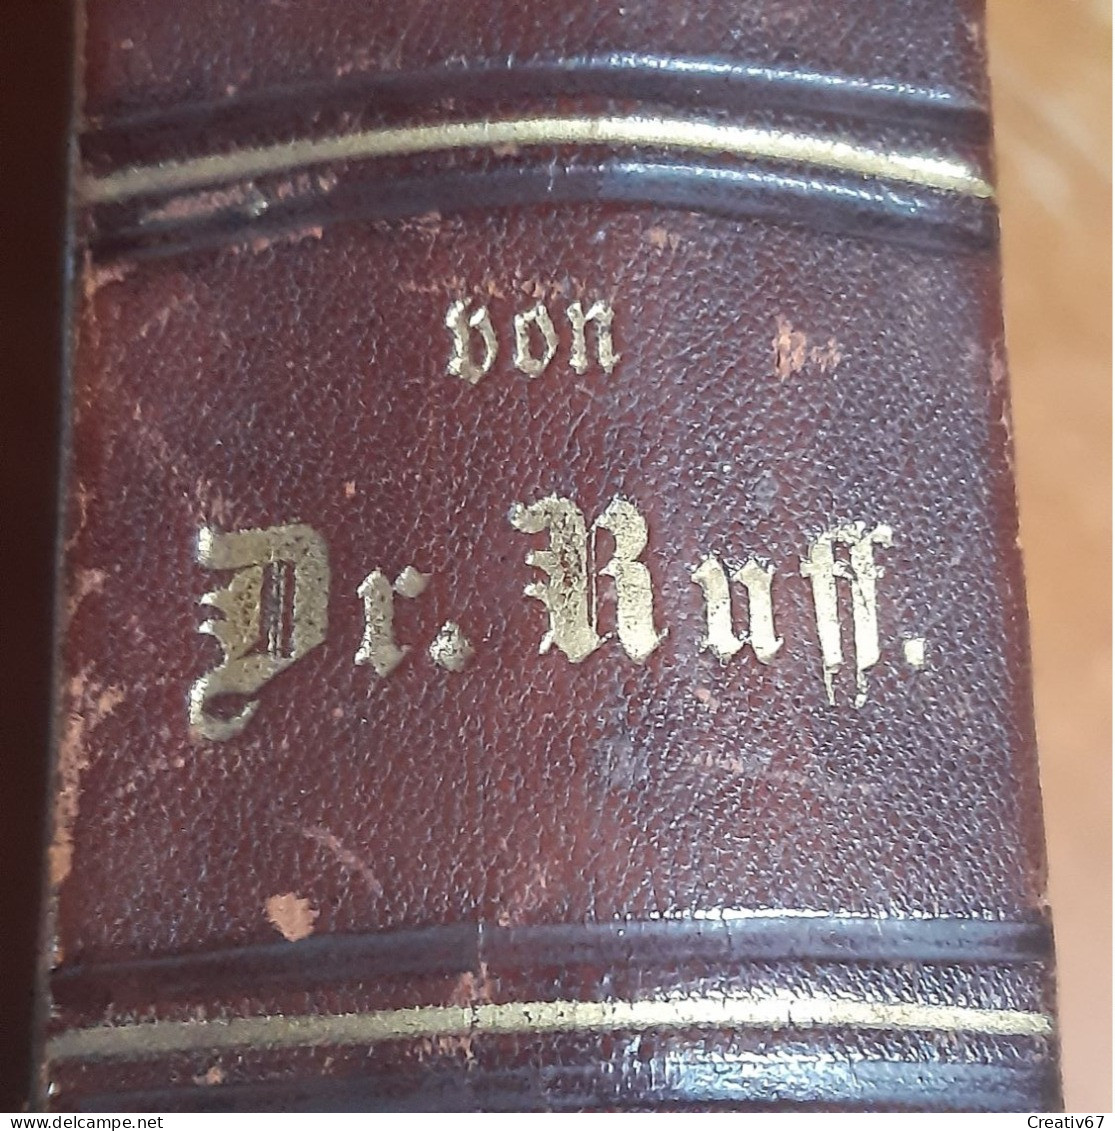 Gesundheit Lexikon Von Dr. Ruff 1882 Illustré Relié Cuir Très Bon état Selon Photos (cs) - Diccionarios